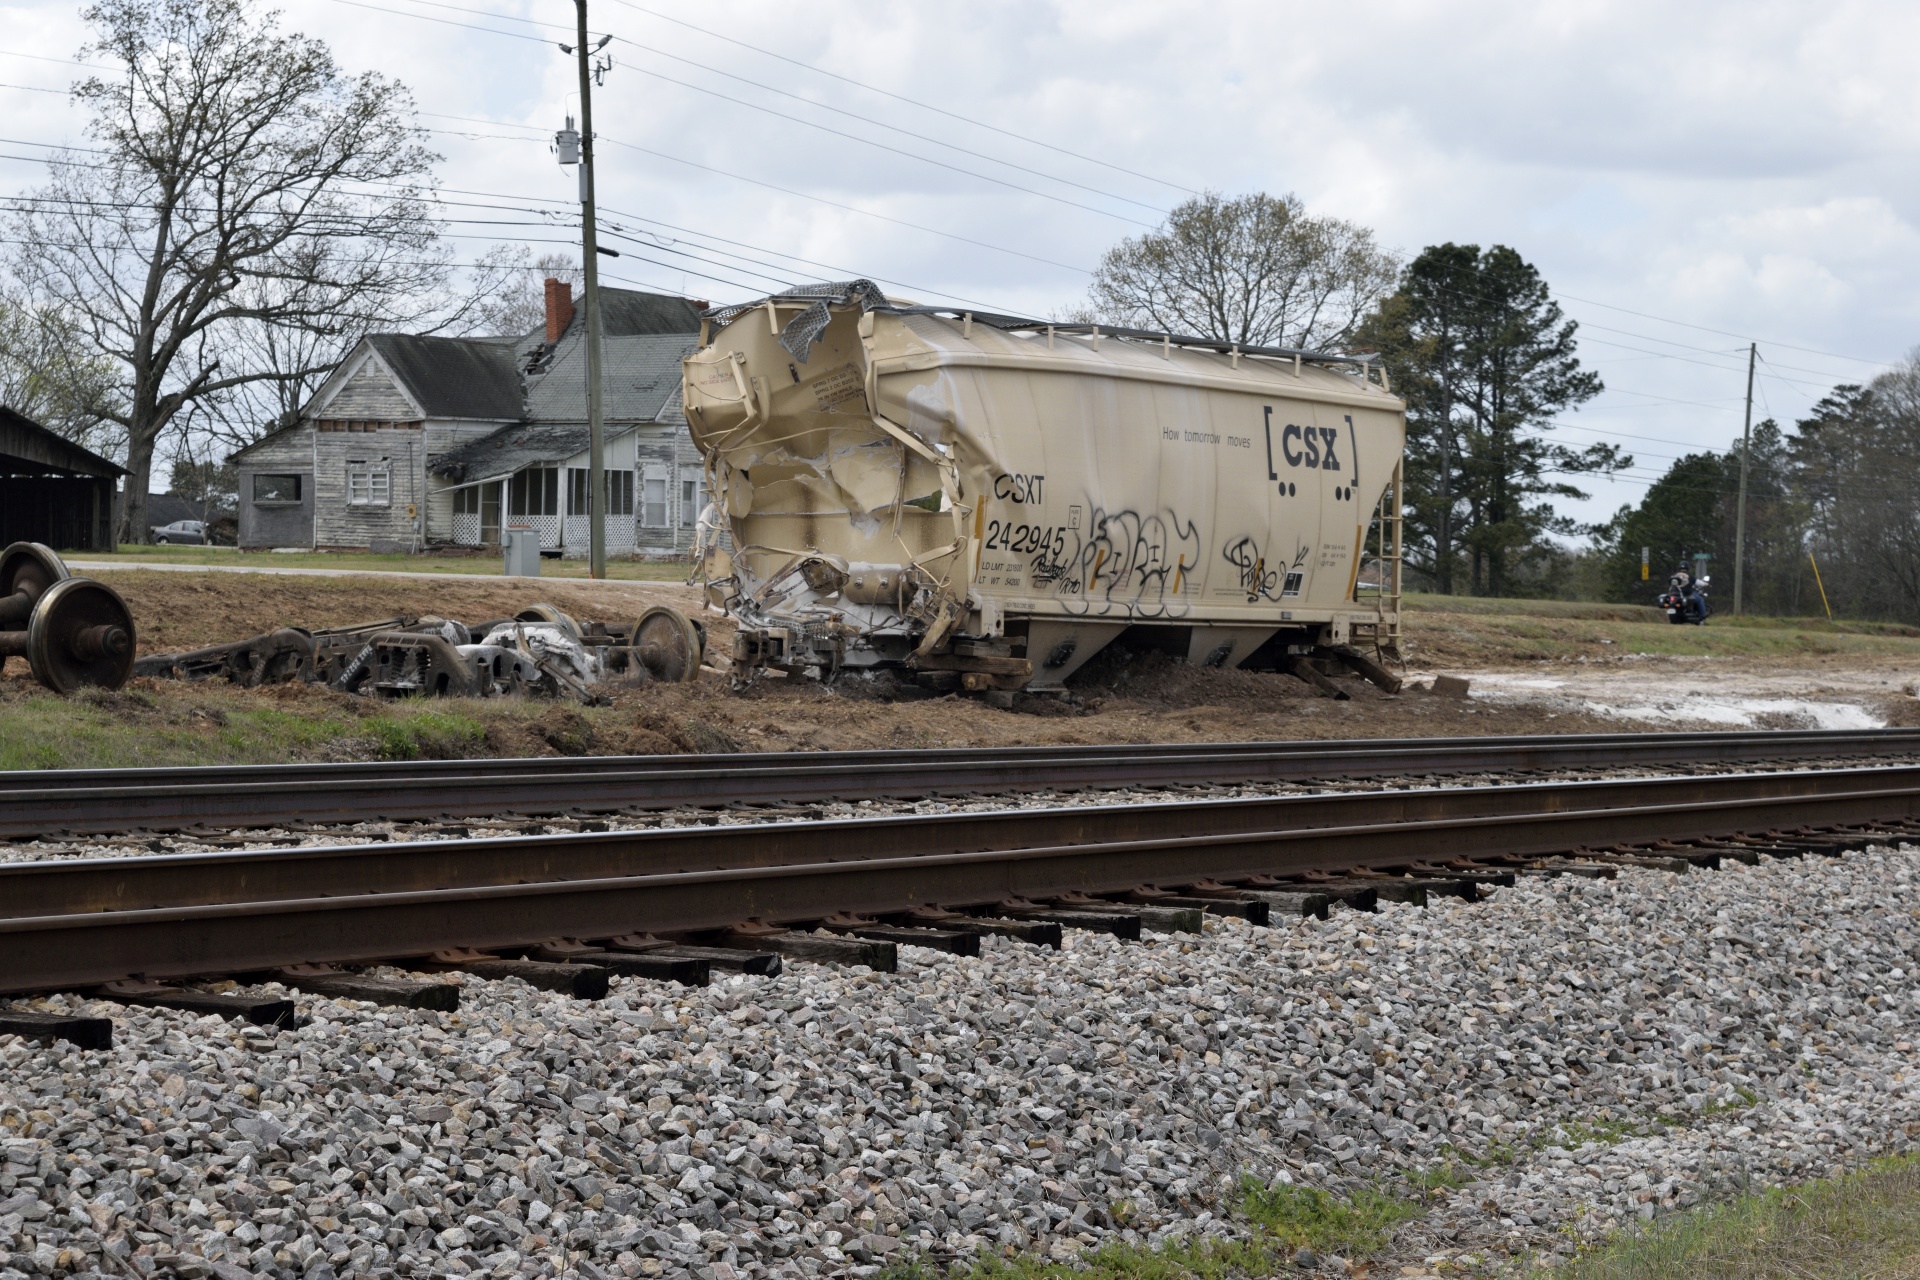 train derailment aftermath accident free photo